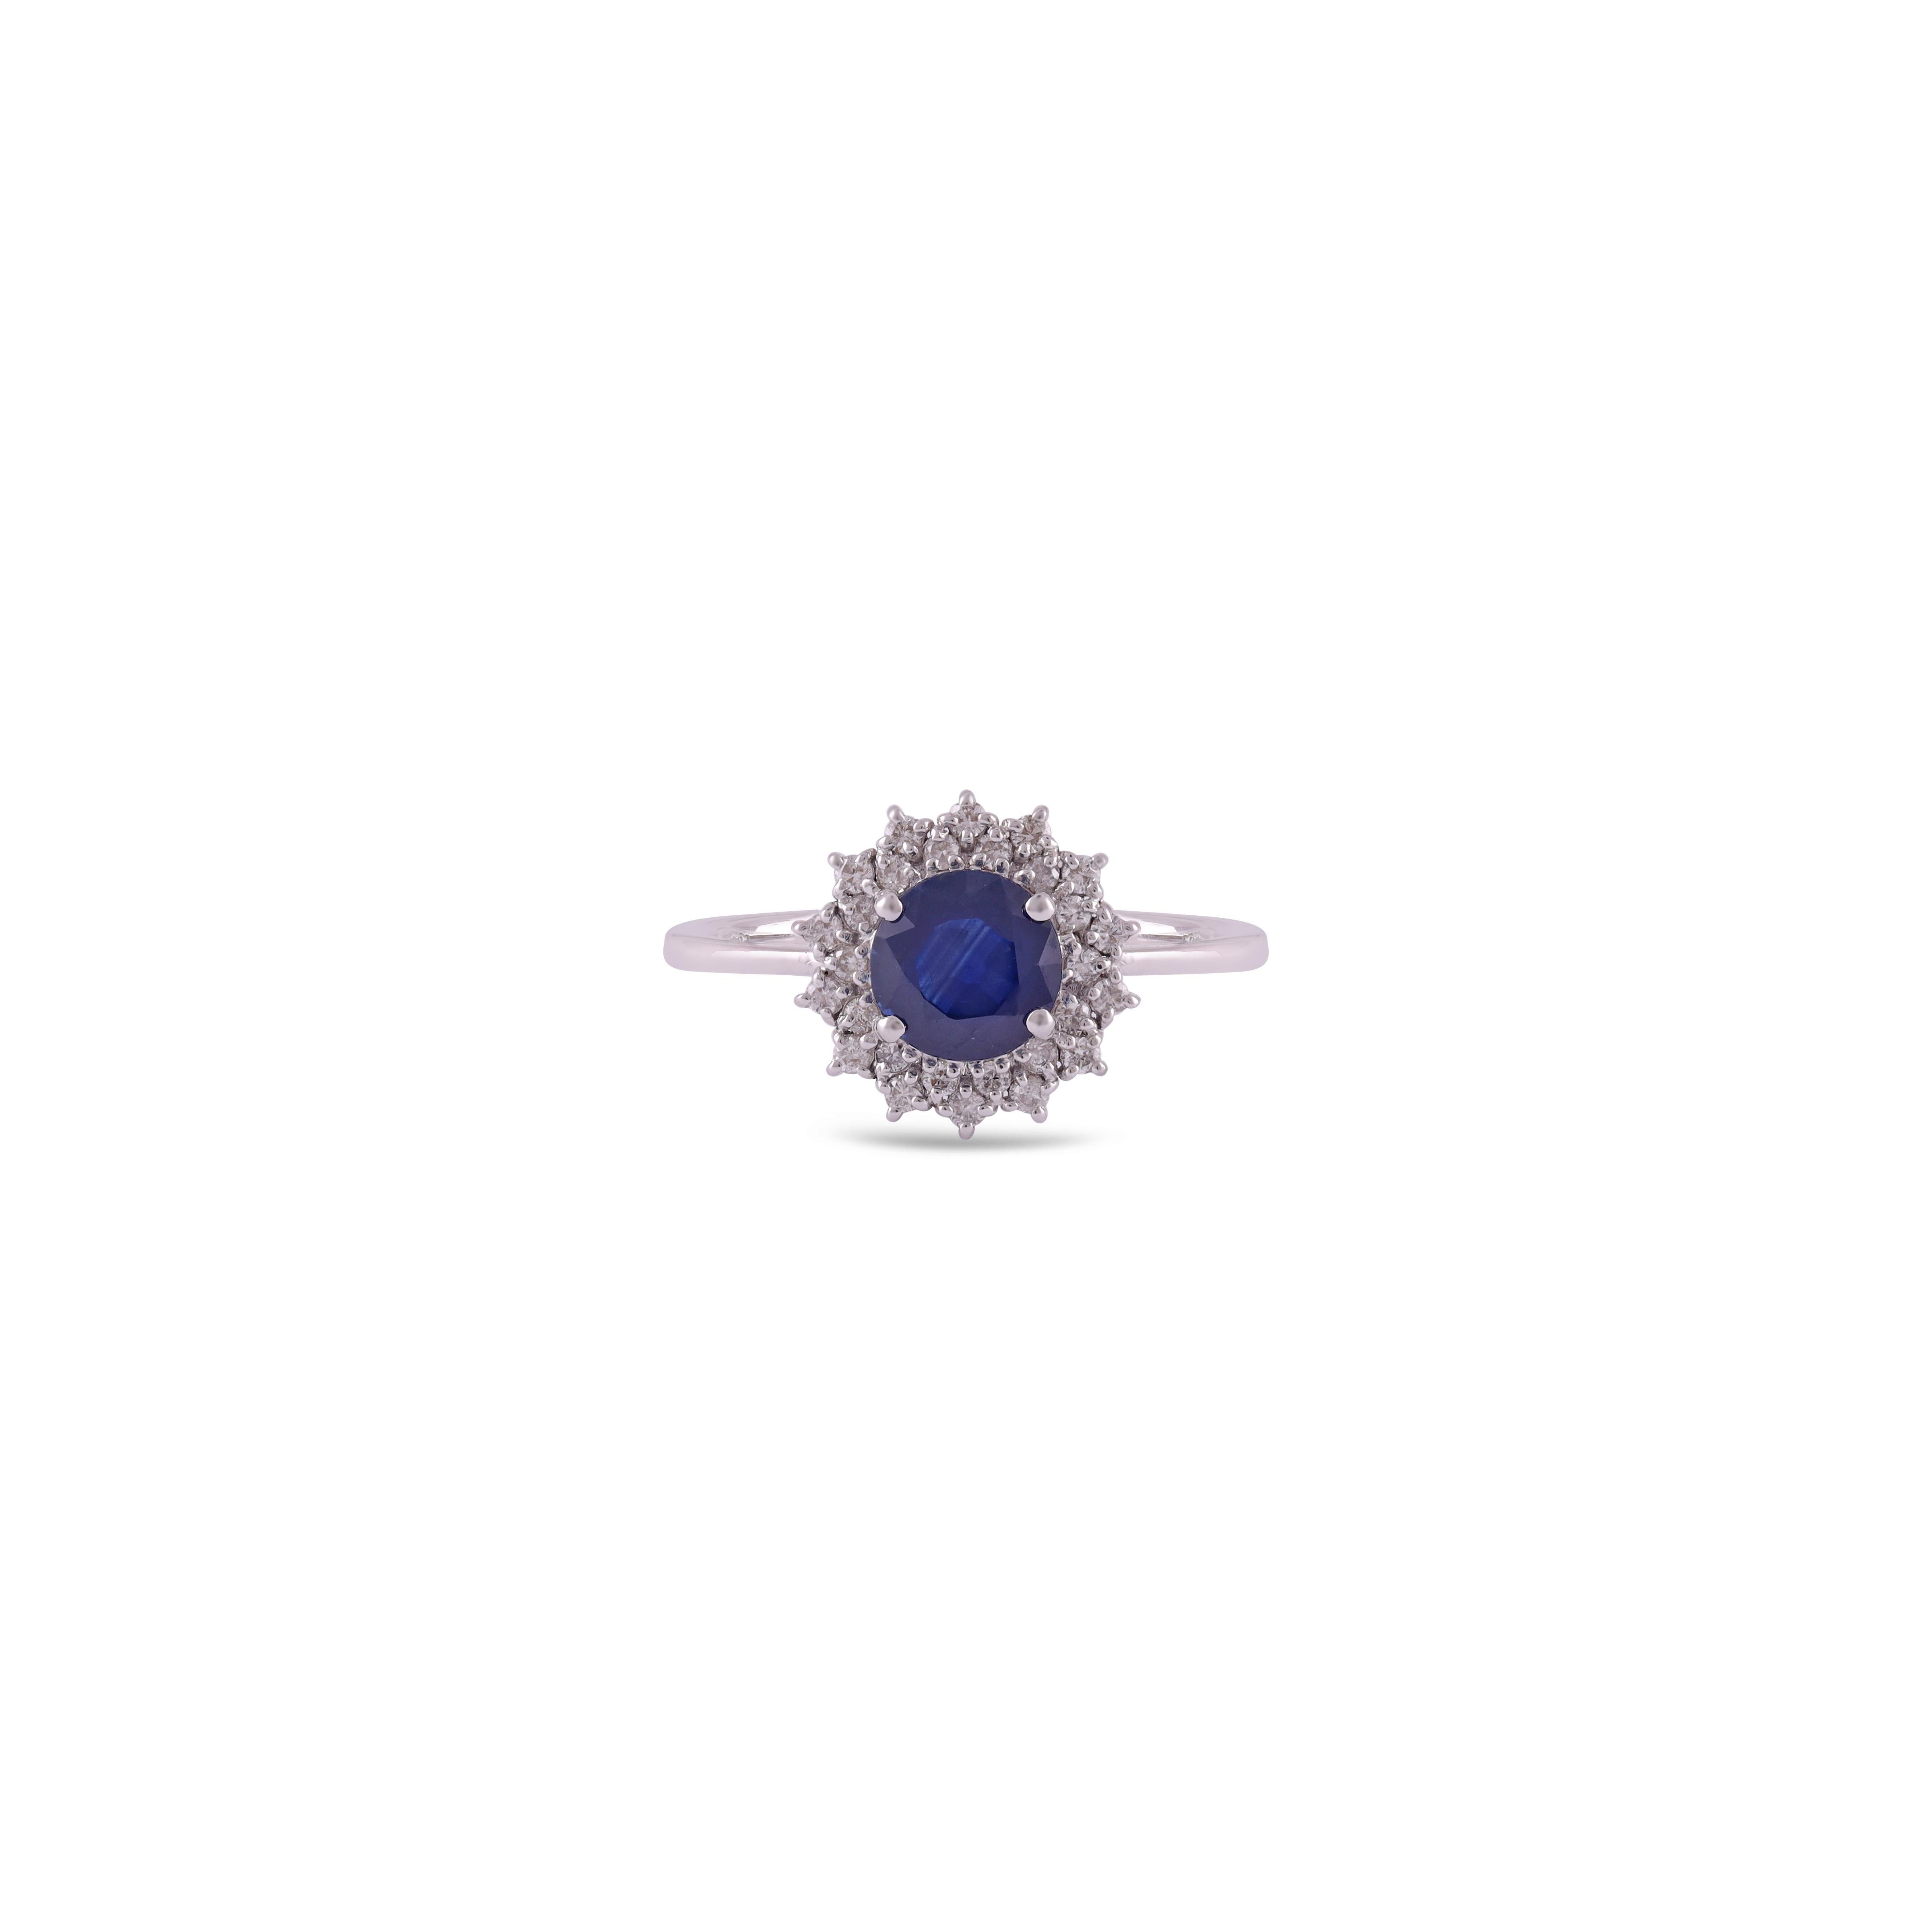 Blue Sapphire - 1.70 Carats
Round Cut Diamond - 0.31 Carat
18KT White Gold